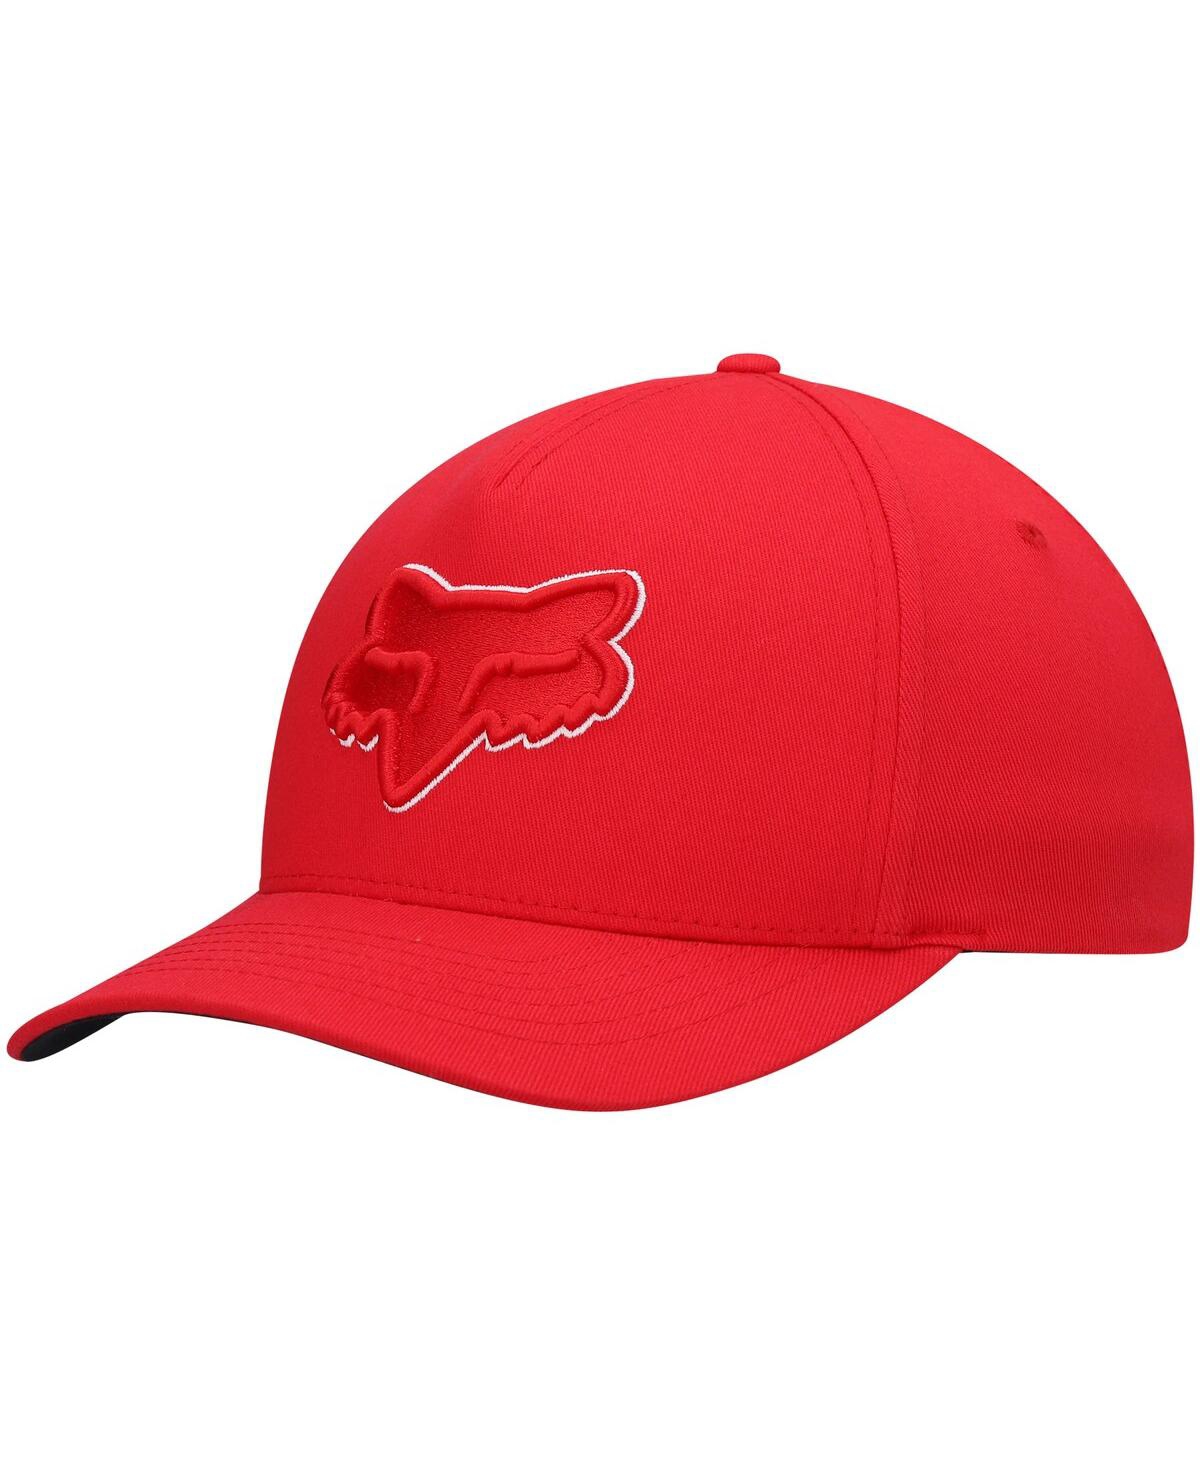 Men's Fox Red Epicycle 2.0 Logo Flex Hat - Red